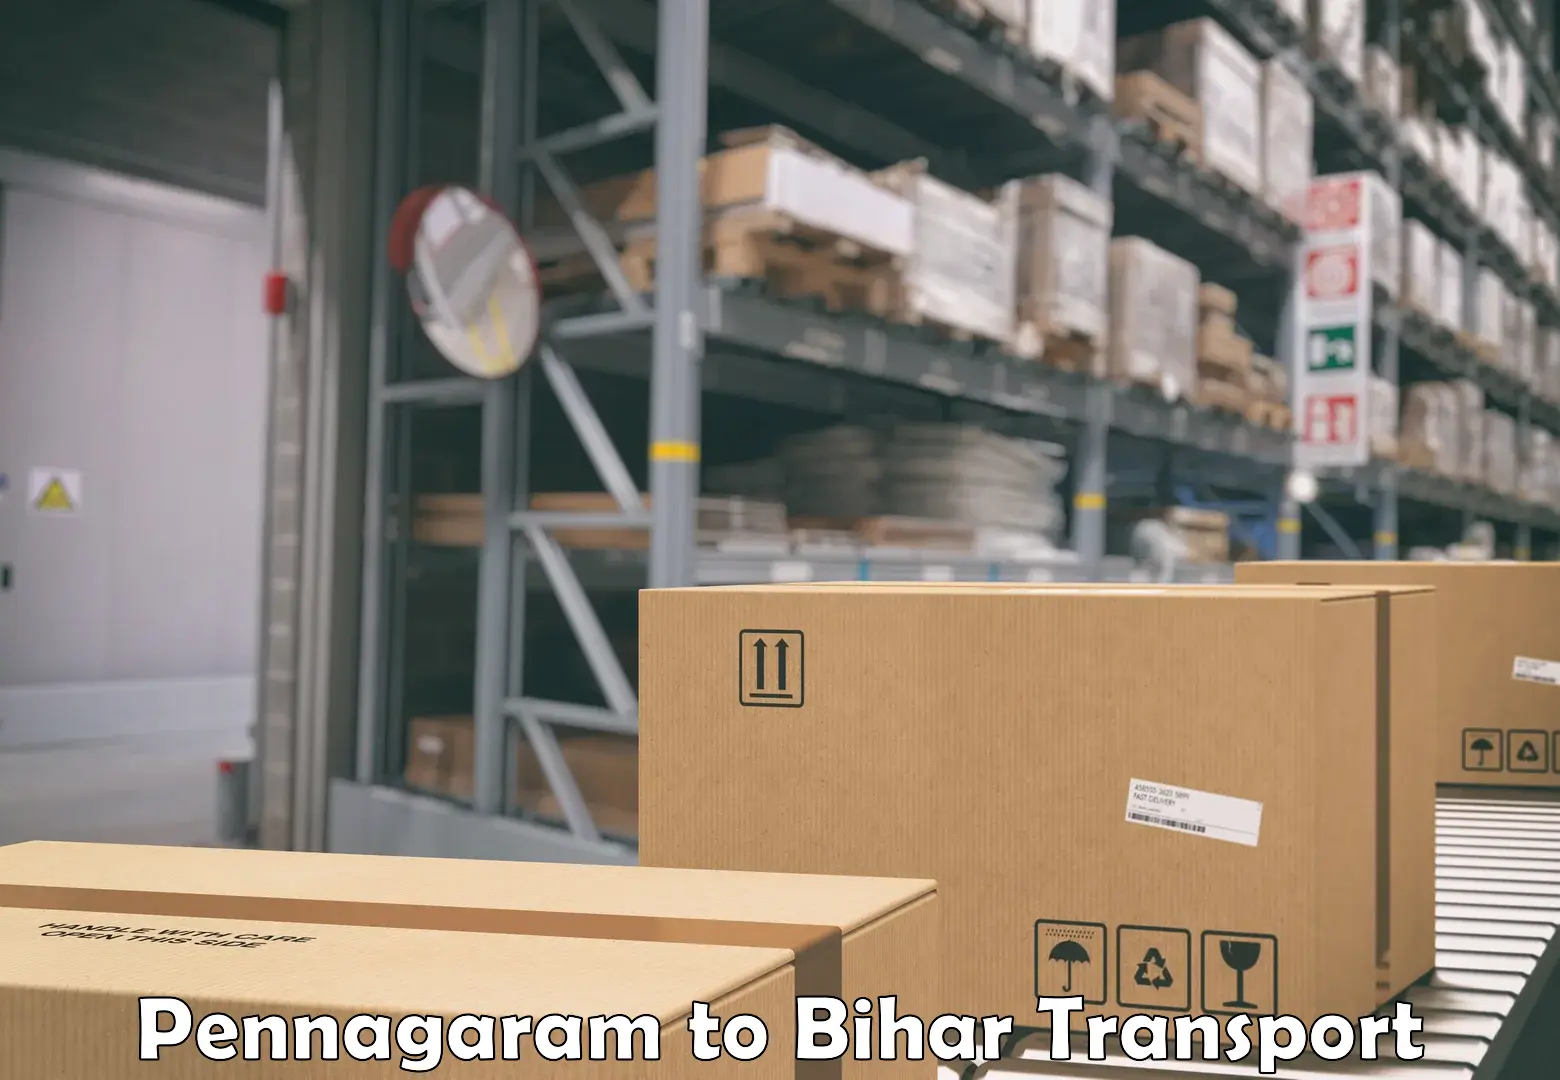 Shipping partner Pennagaram to Bihar